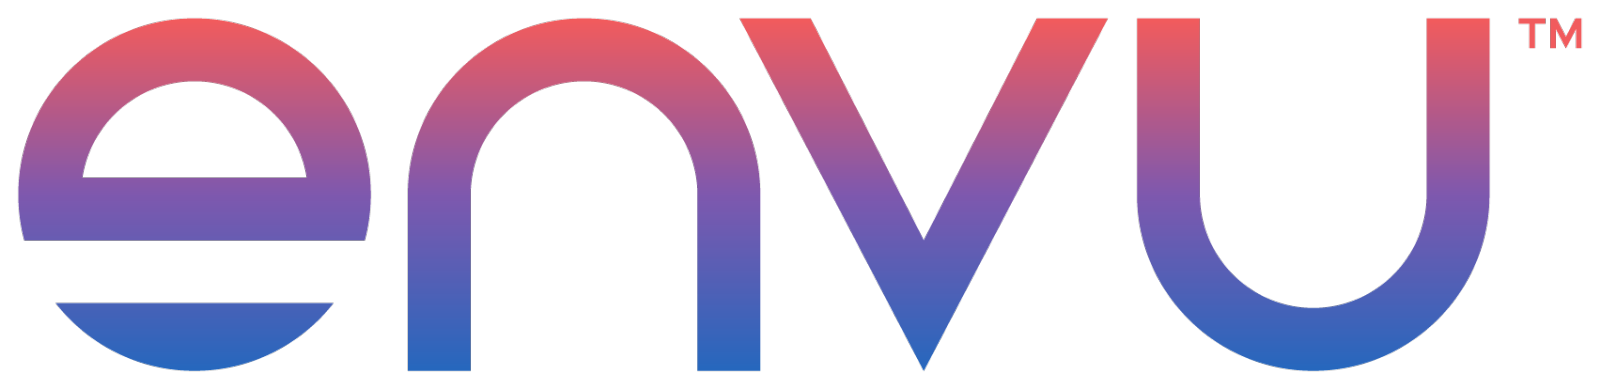 ENVU logo